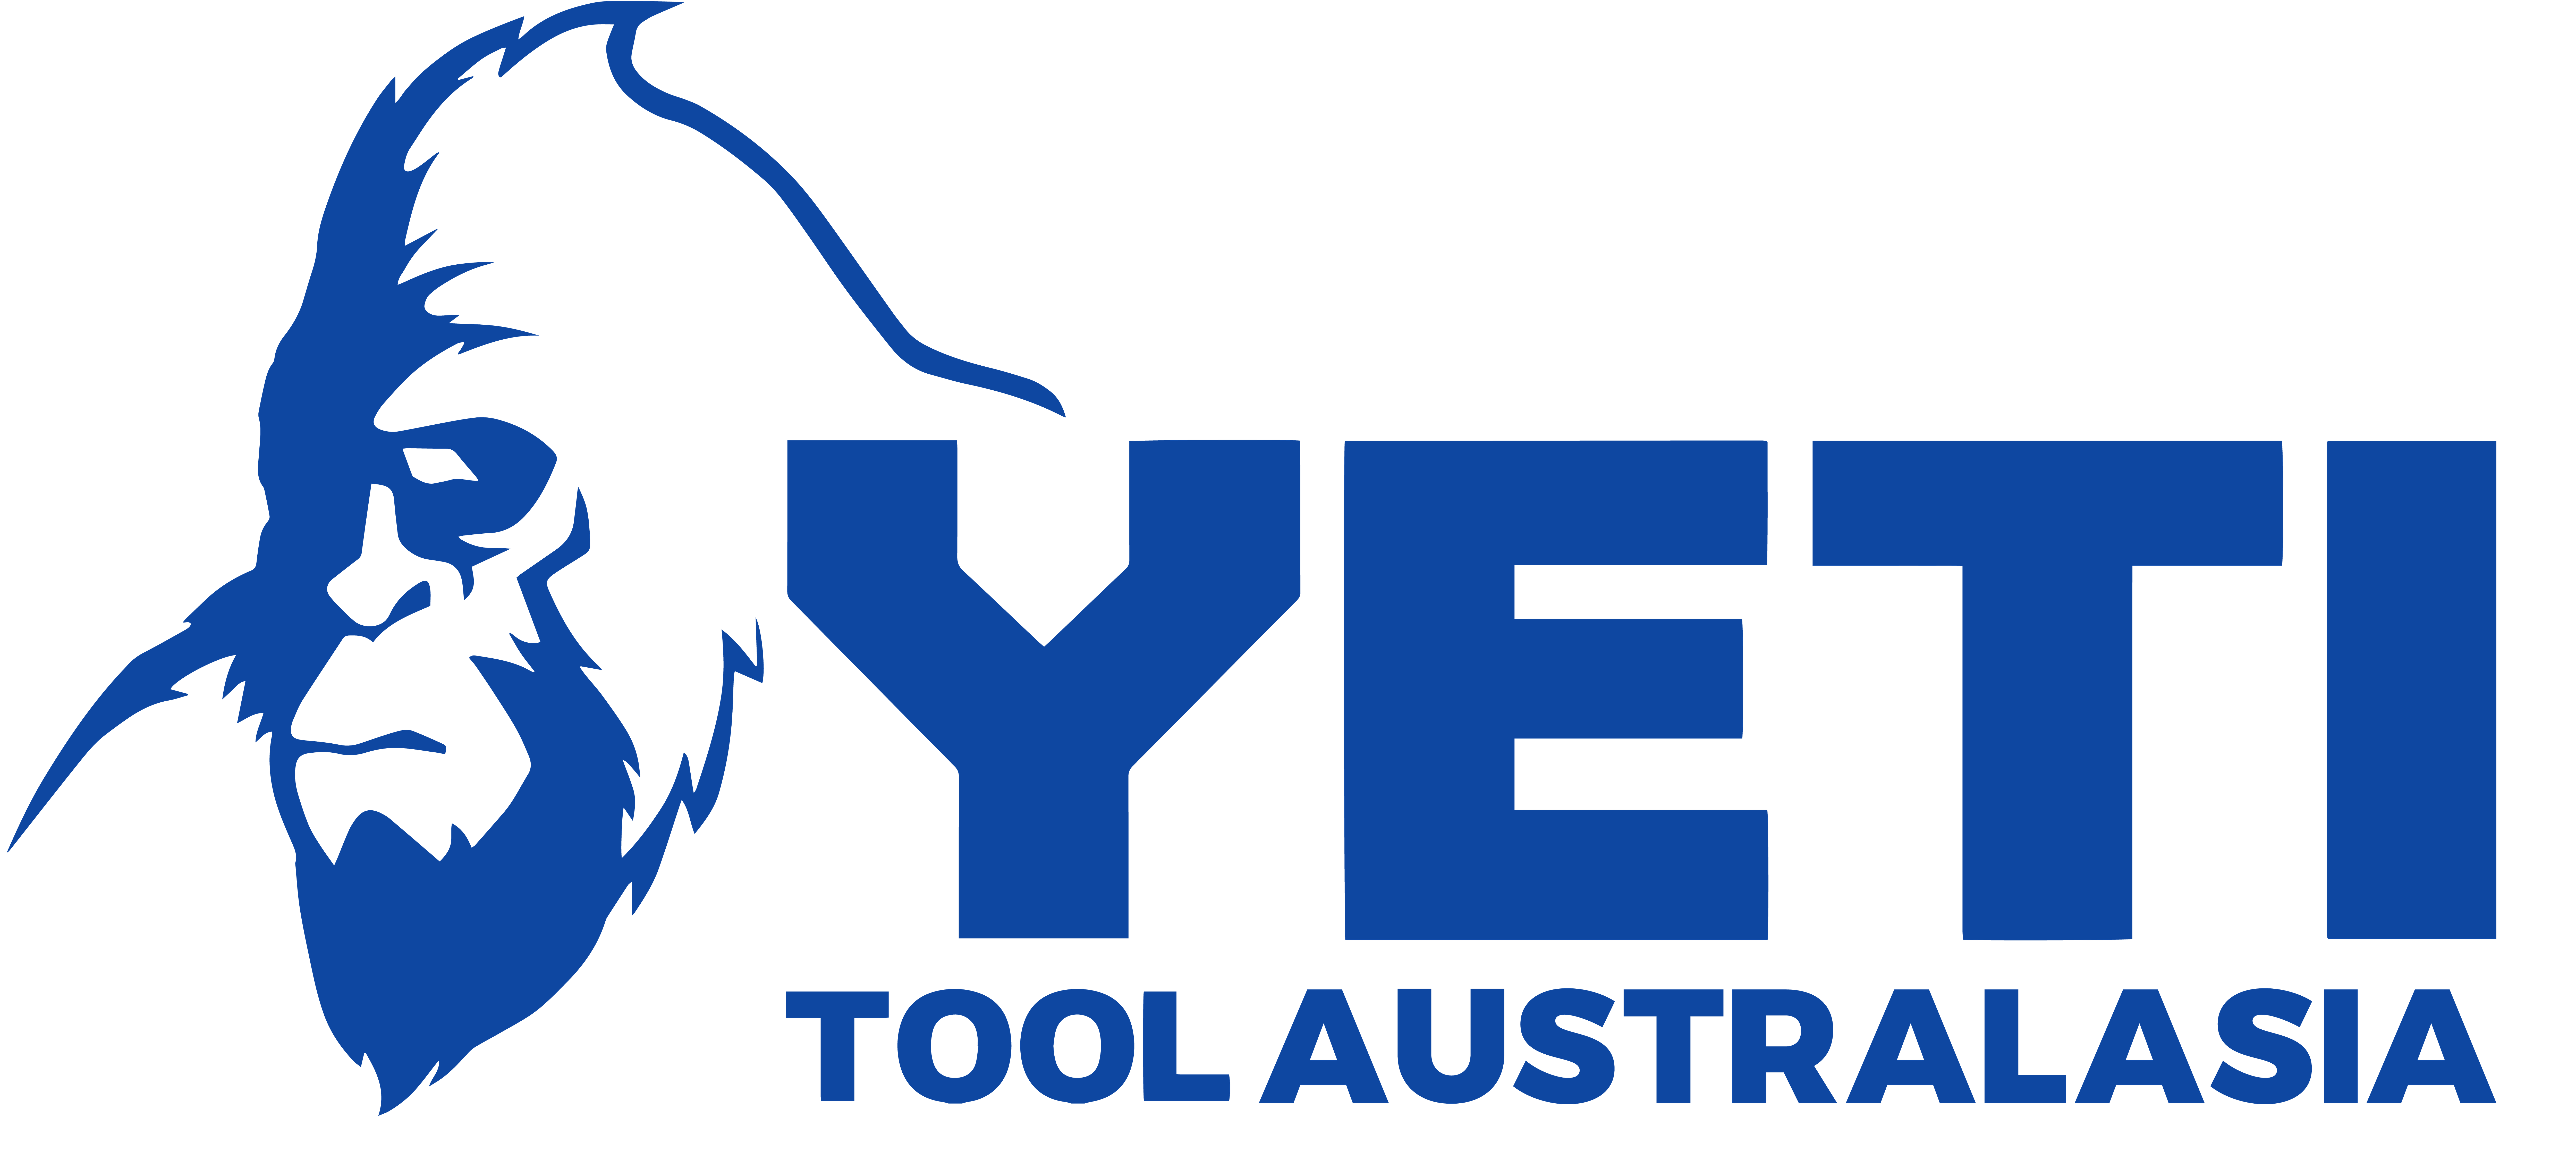 YetiTool Australasia Logo - Blue